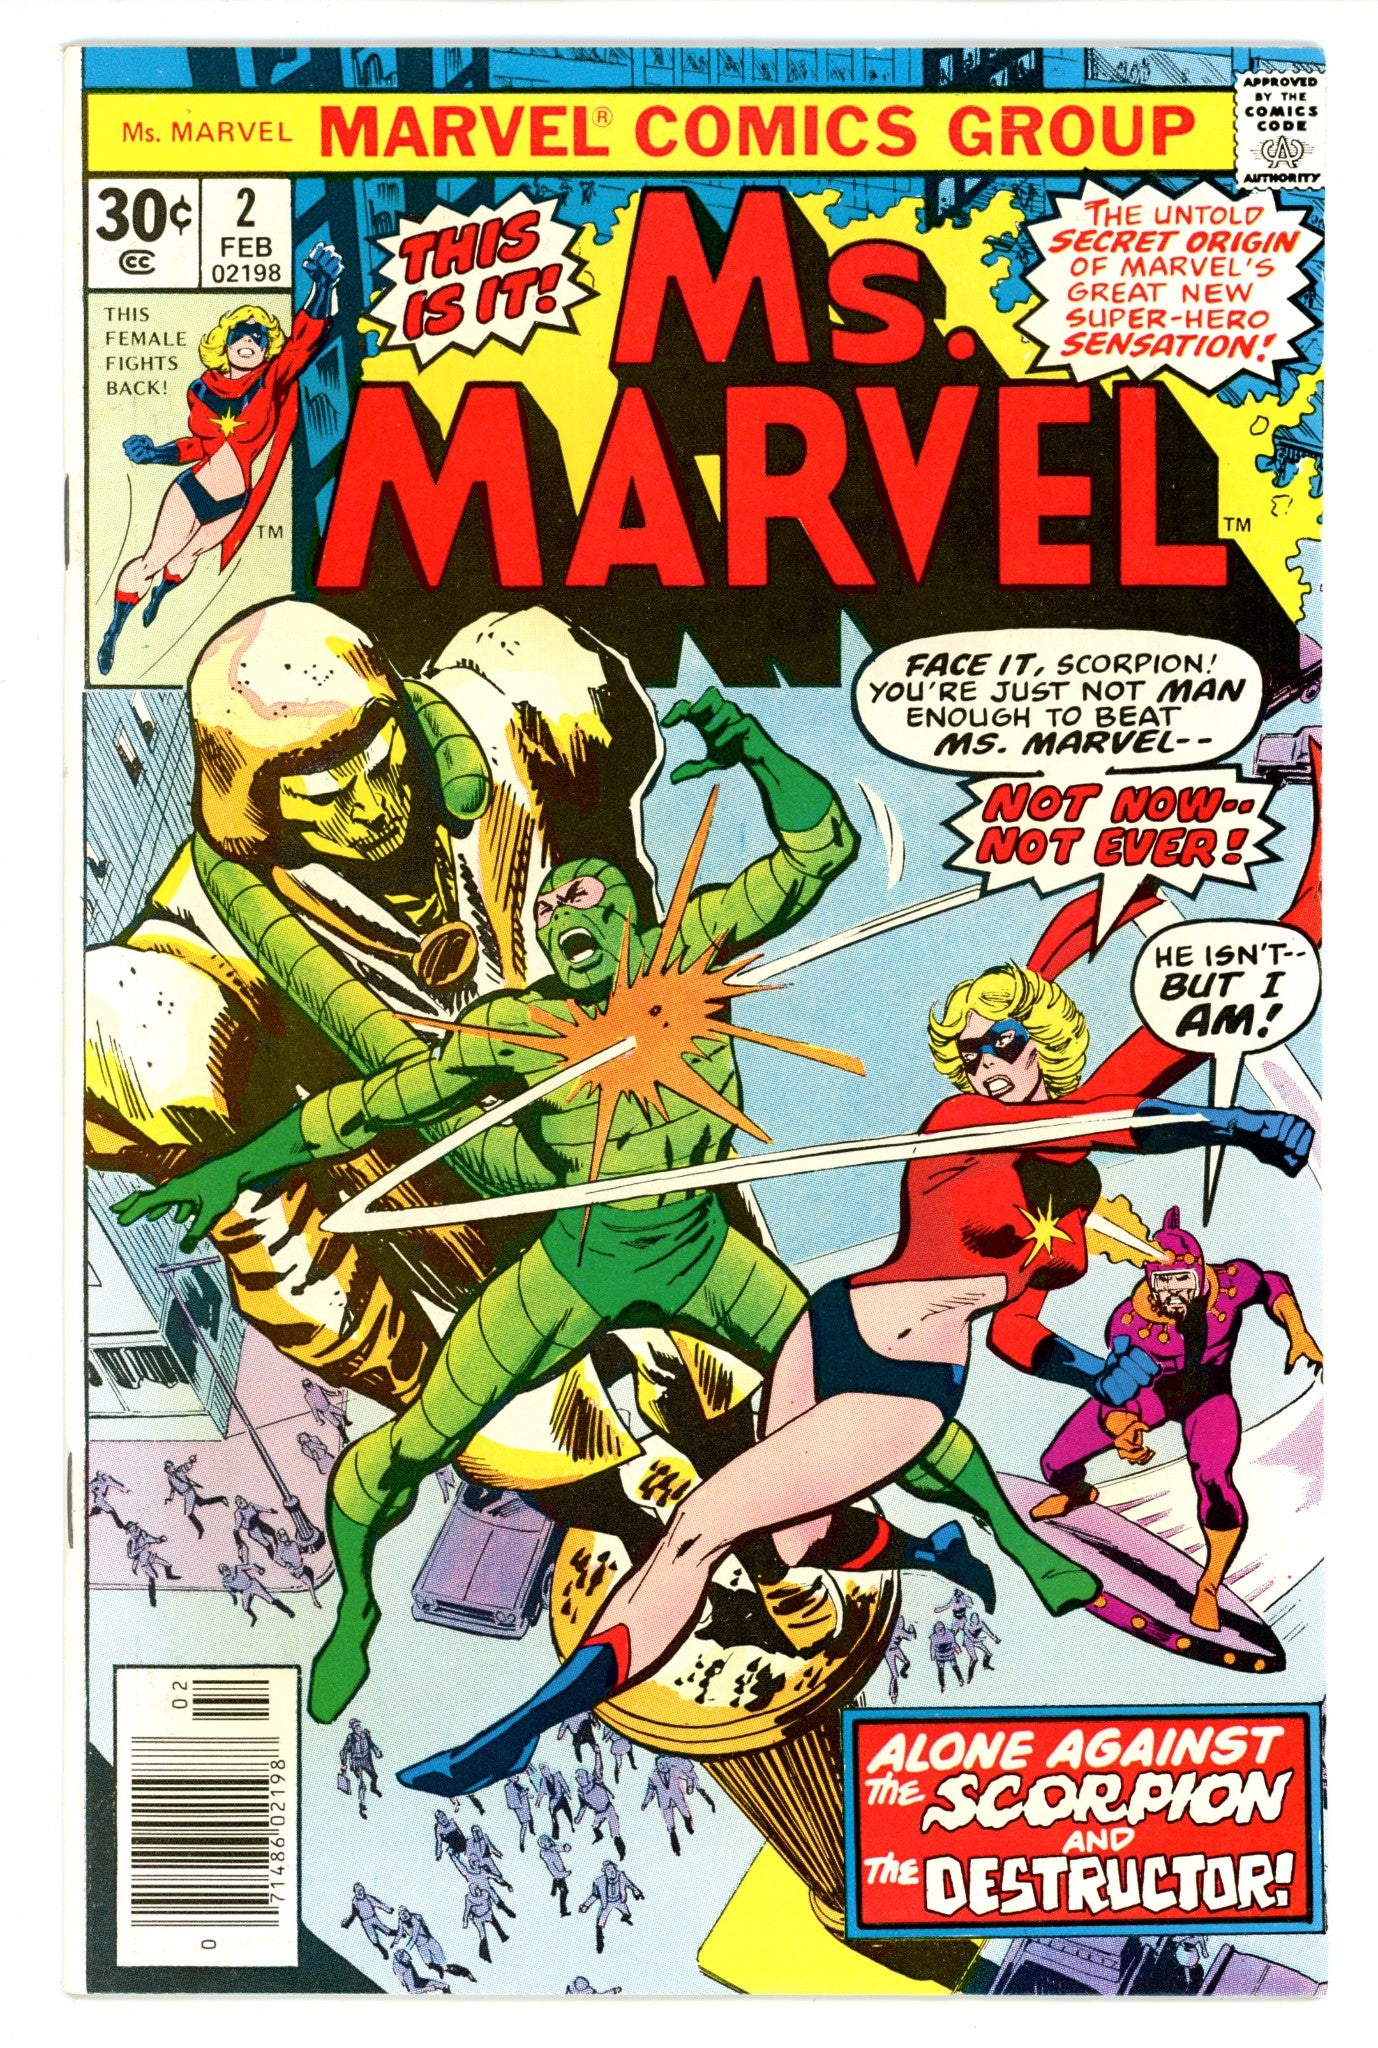 Ms. Marvel Vol 1 2 FN+ (6.5) (1977) 